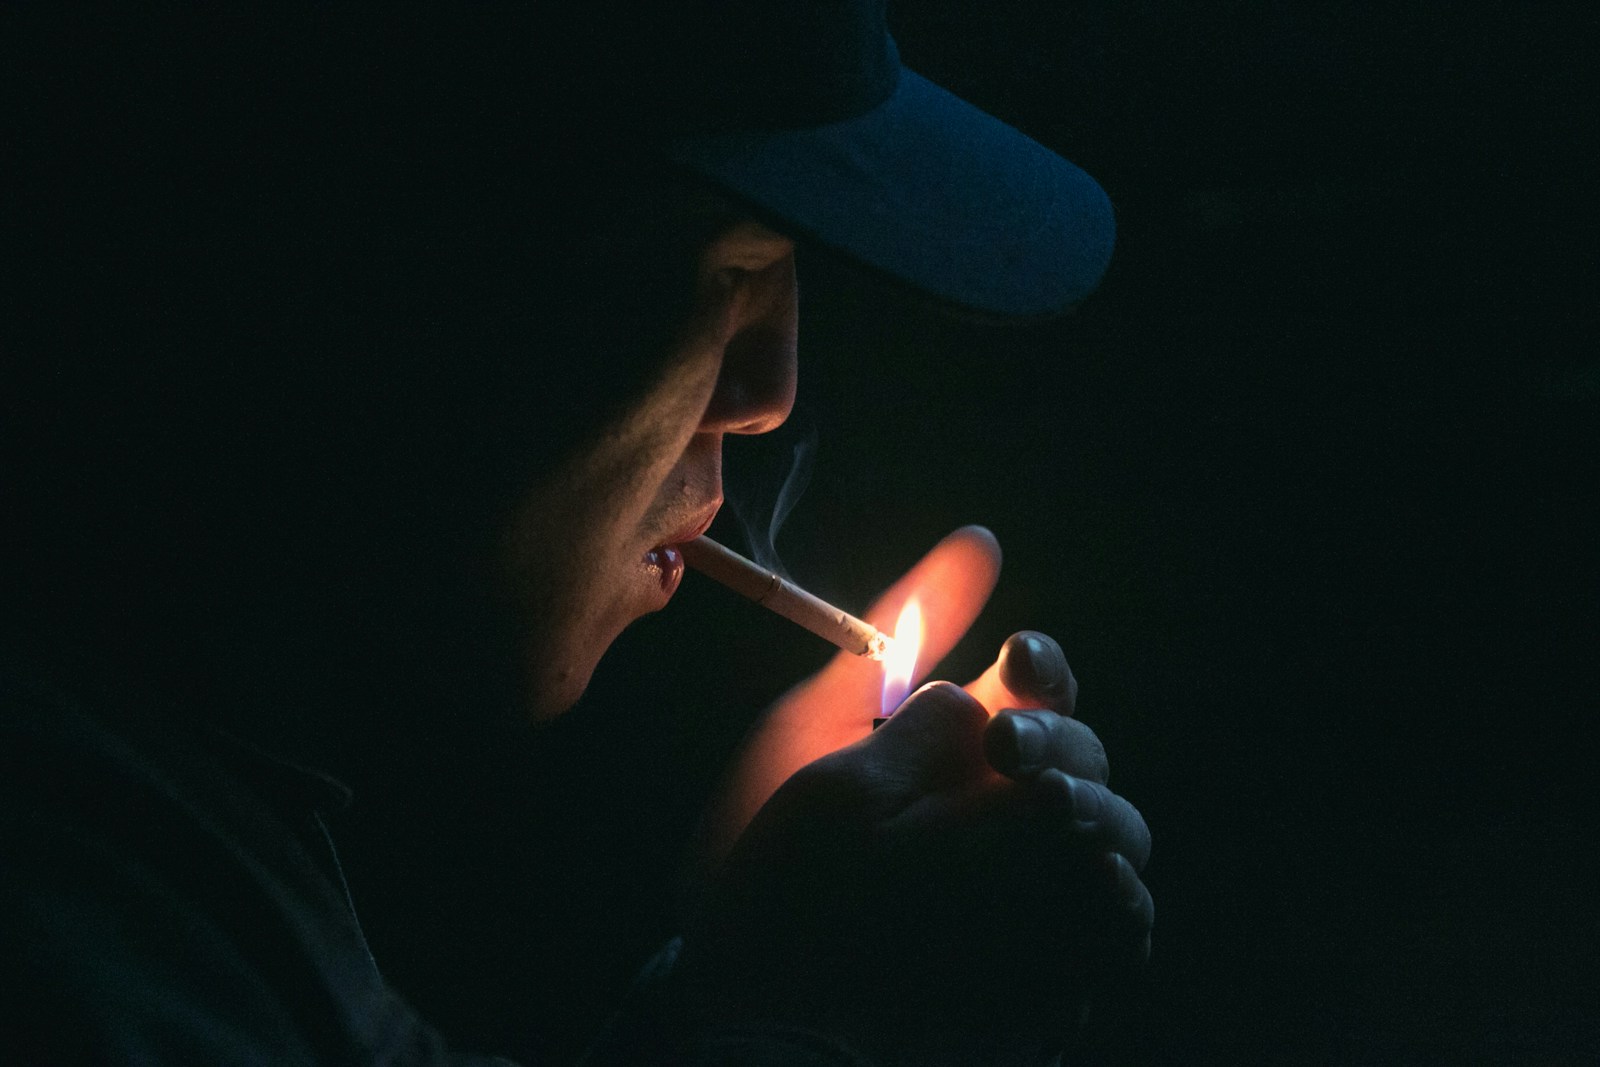 man lighting his cigarette